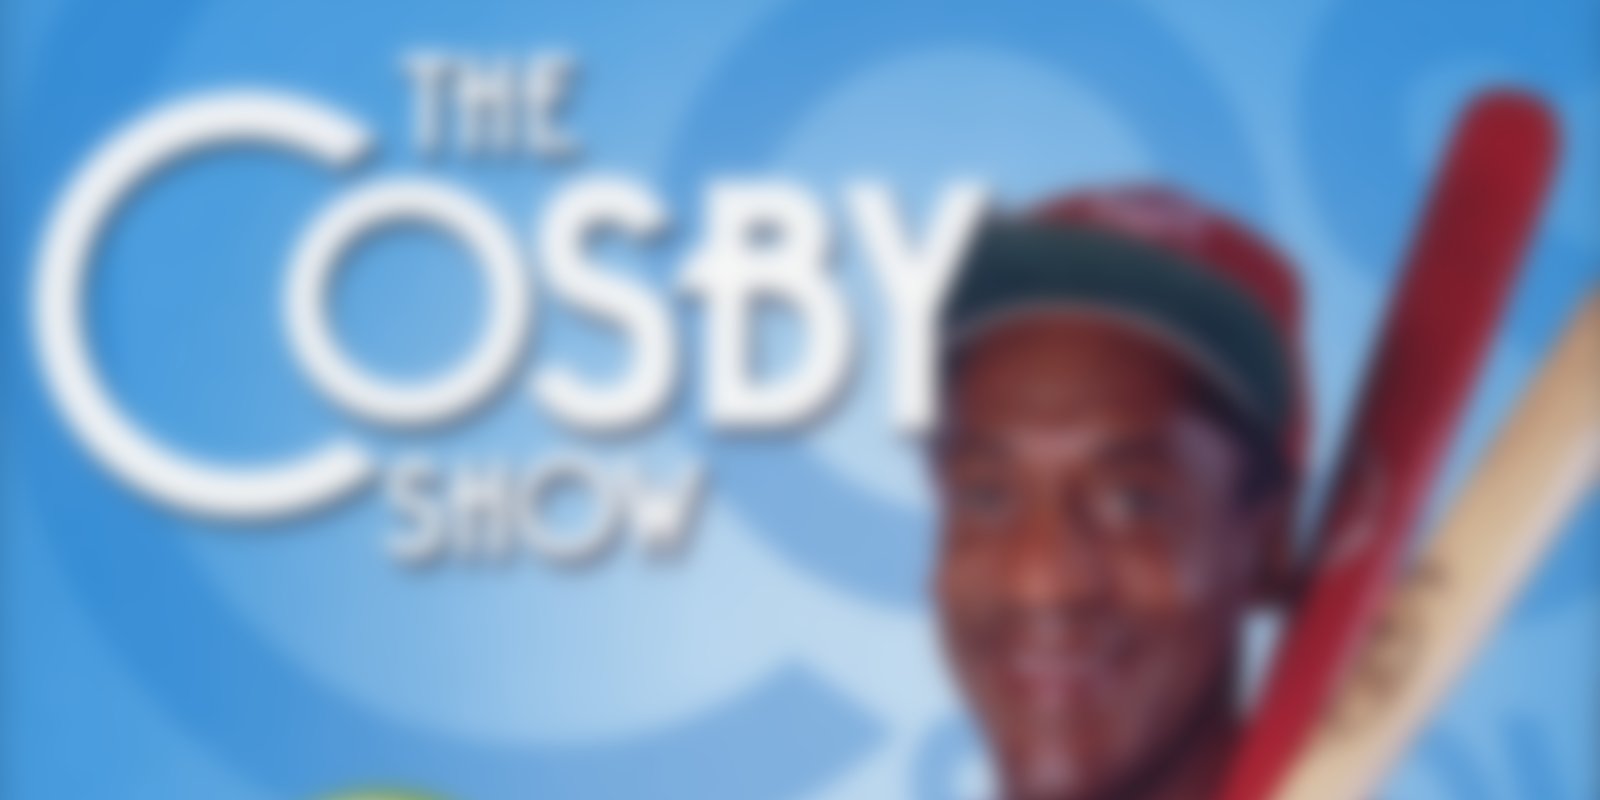 Die Bill Cosby Show - Staffel 7